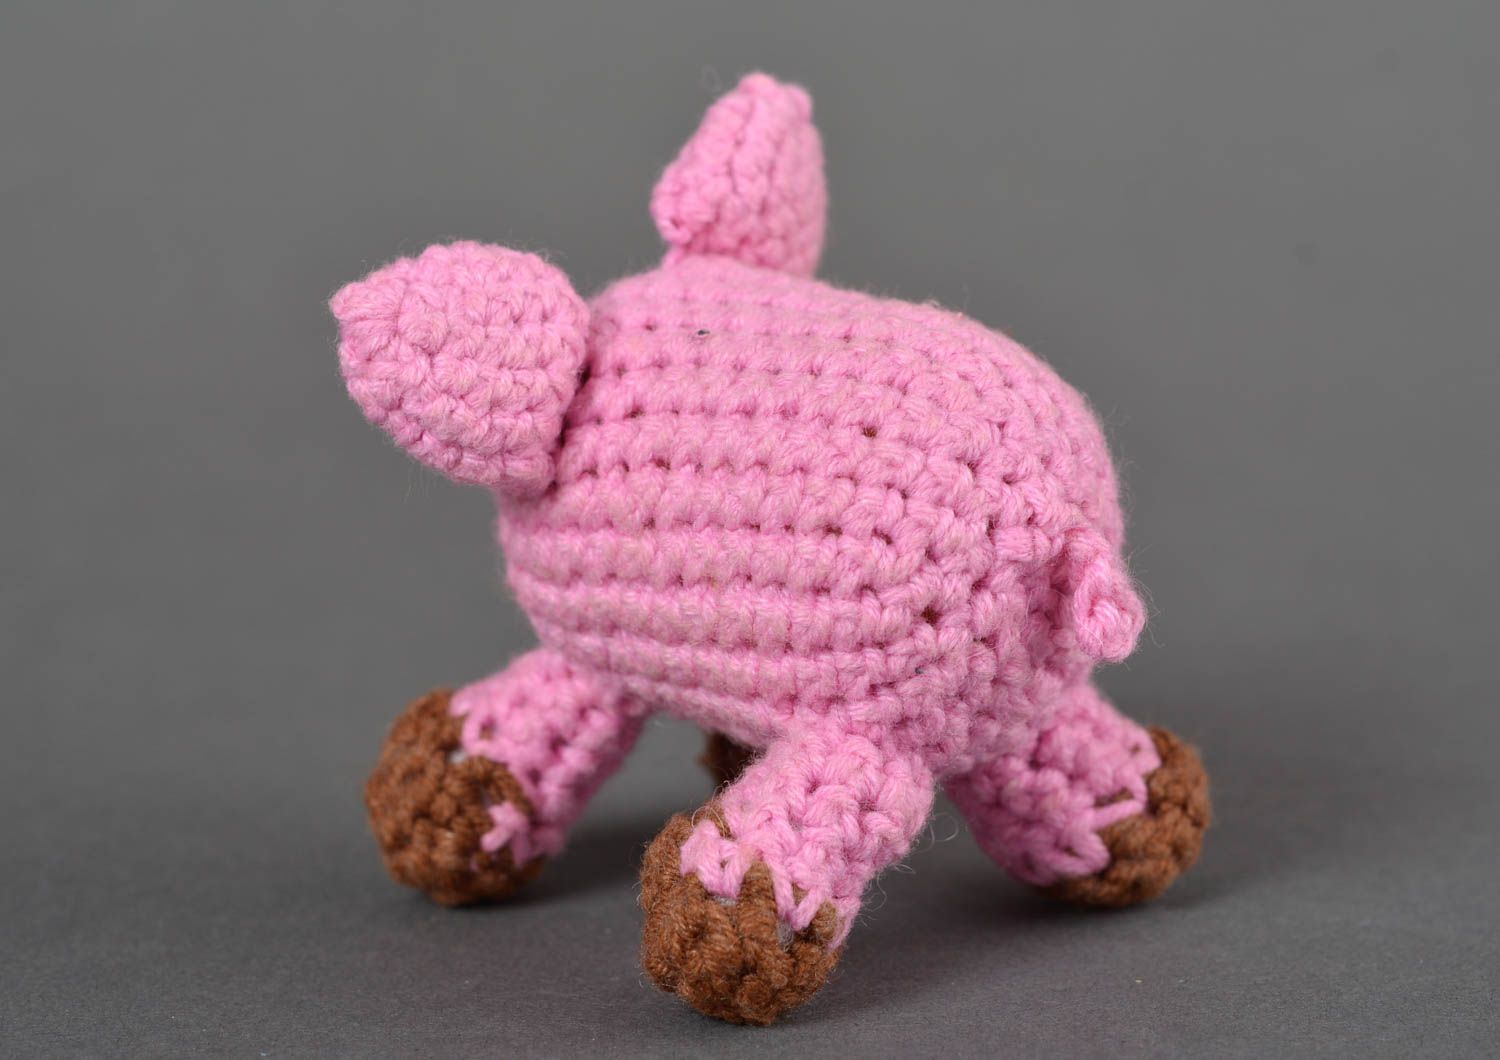 Unuusal handmade crochet soft toy baby rattle best toys for kids stuffed toy photo 4